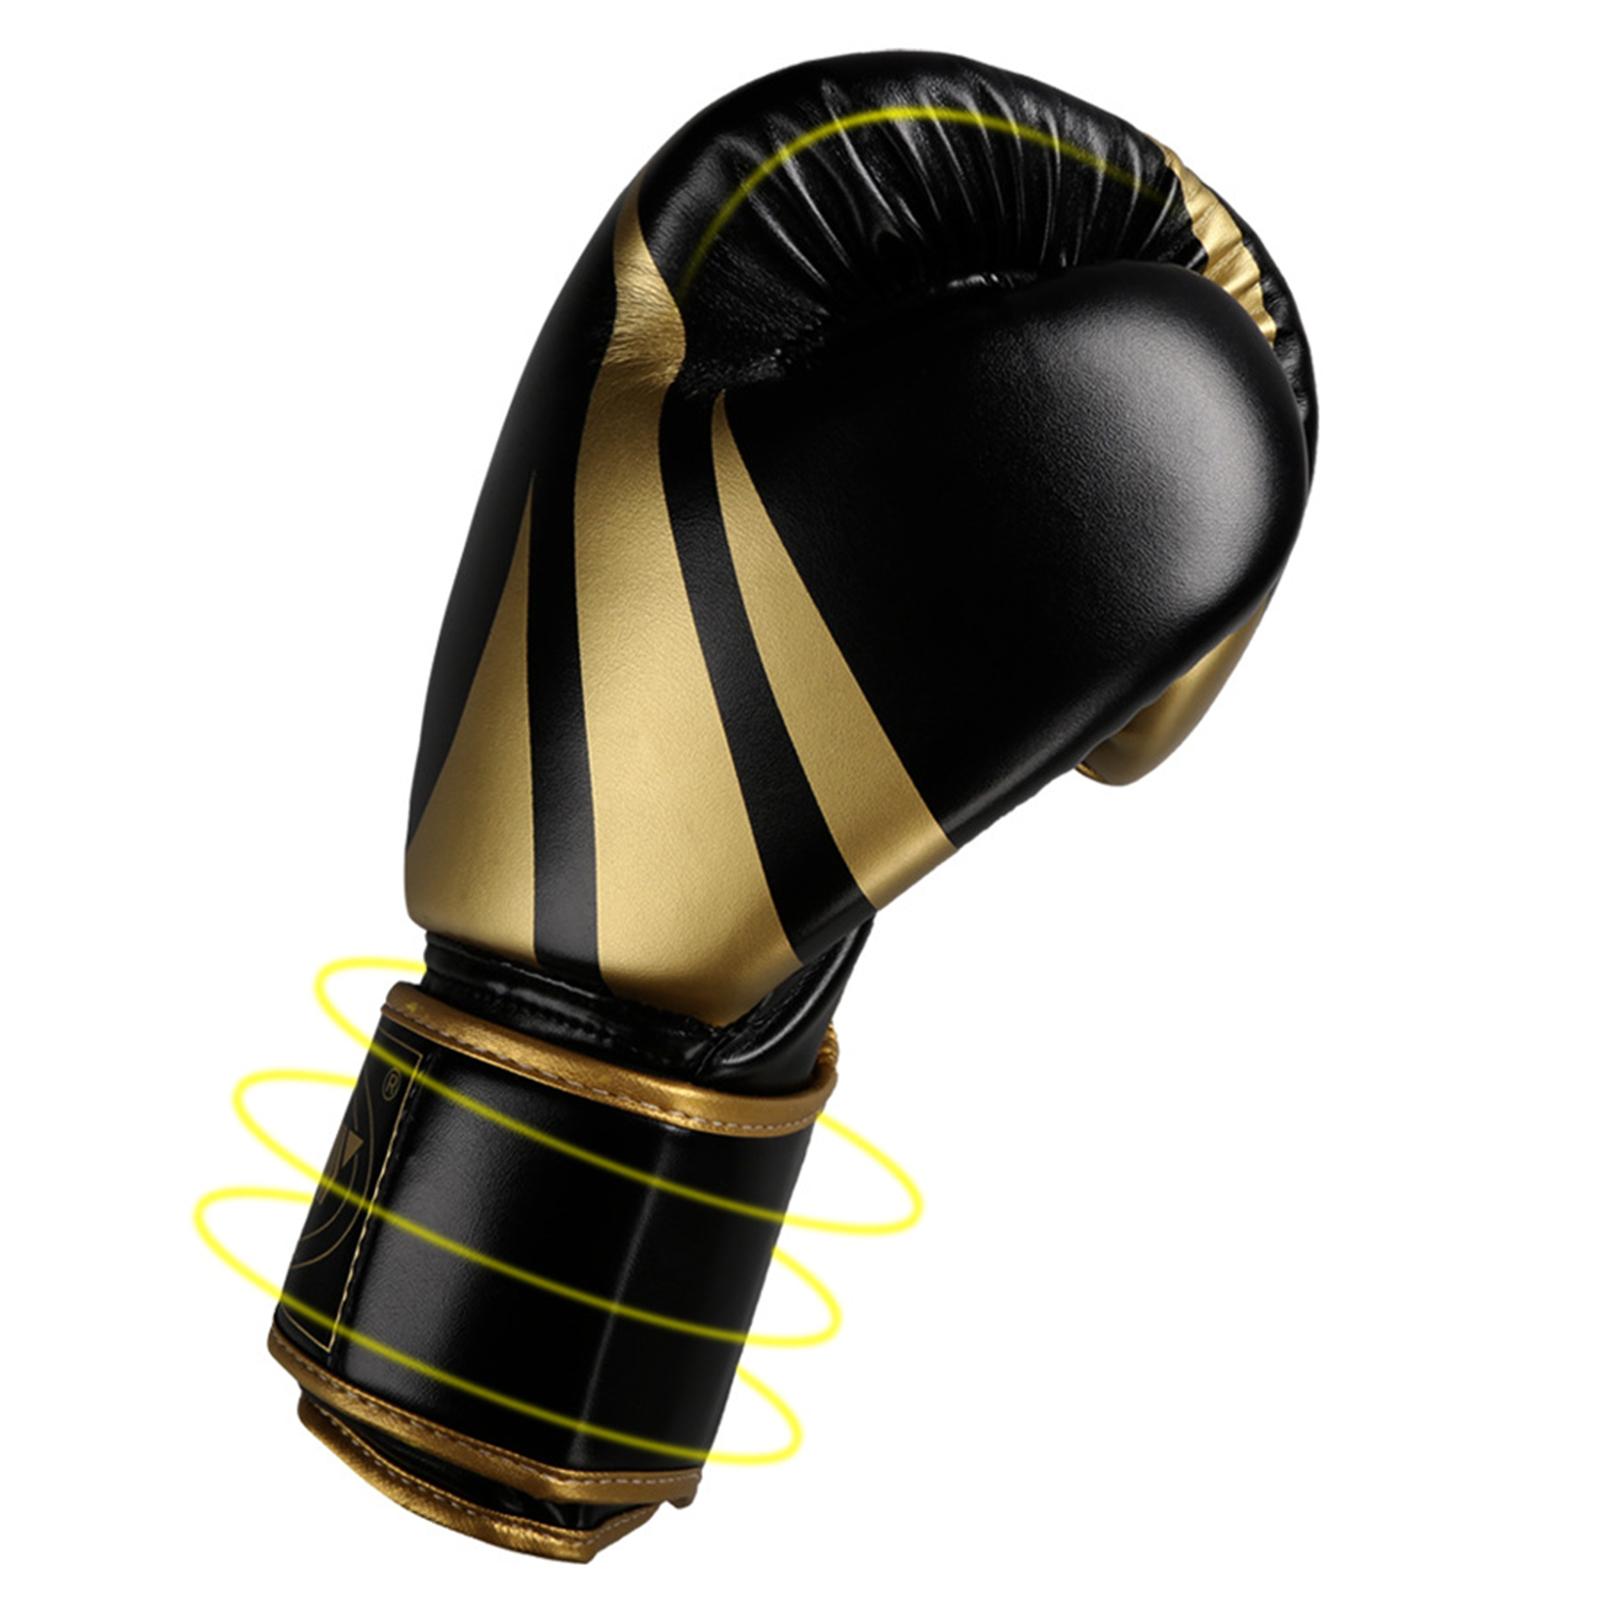 Mma Gloves Fighting Glove Exercise Boxing Training Gloves Kick Boxing Gloves 8oz